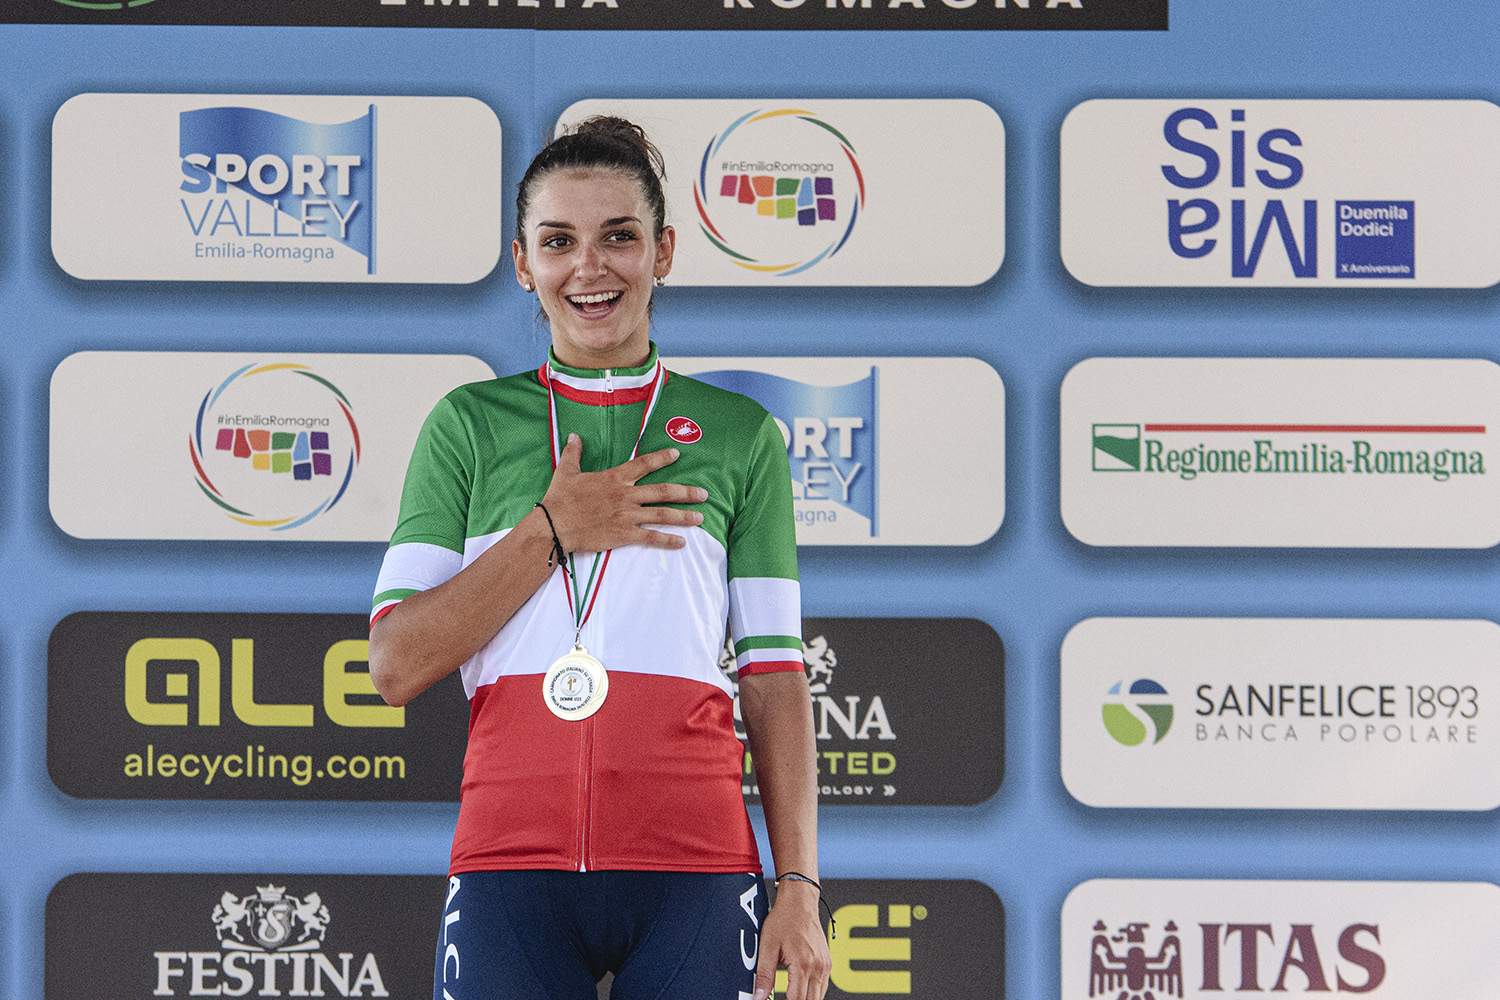 Eleonora Gasparrini is the first Italian U23 champion in history